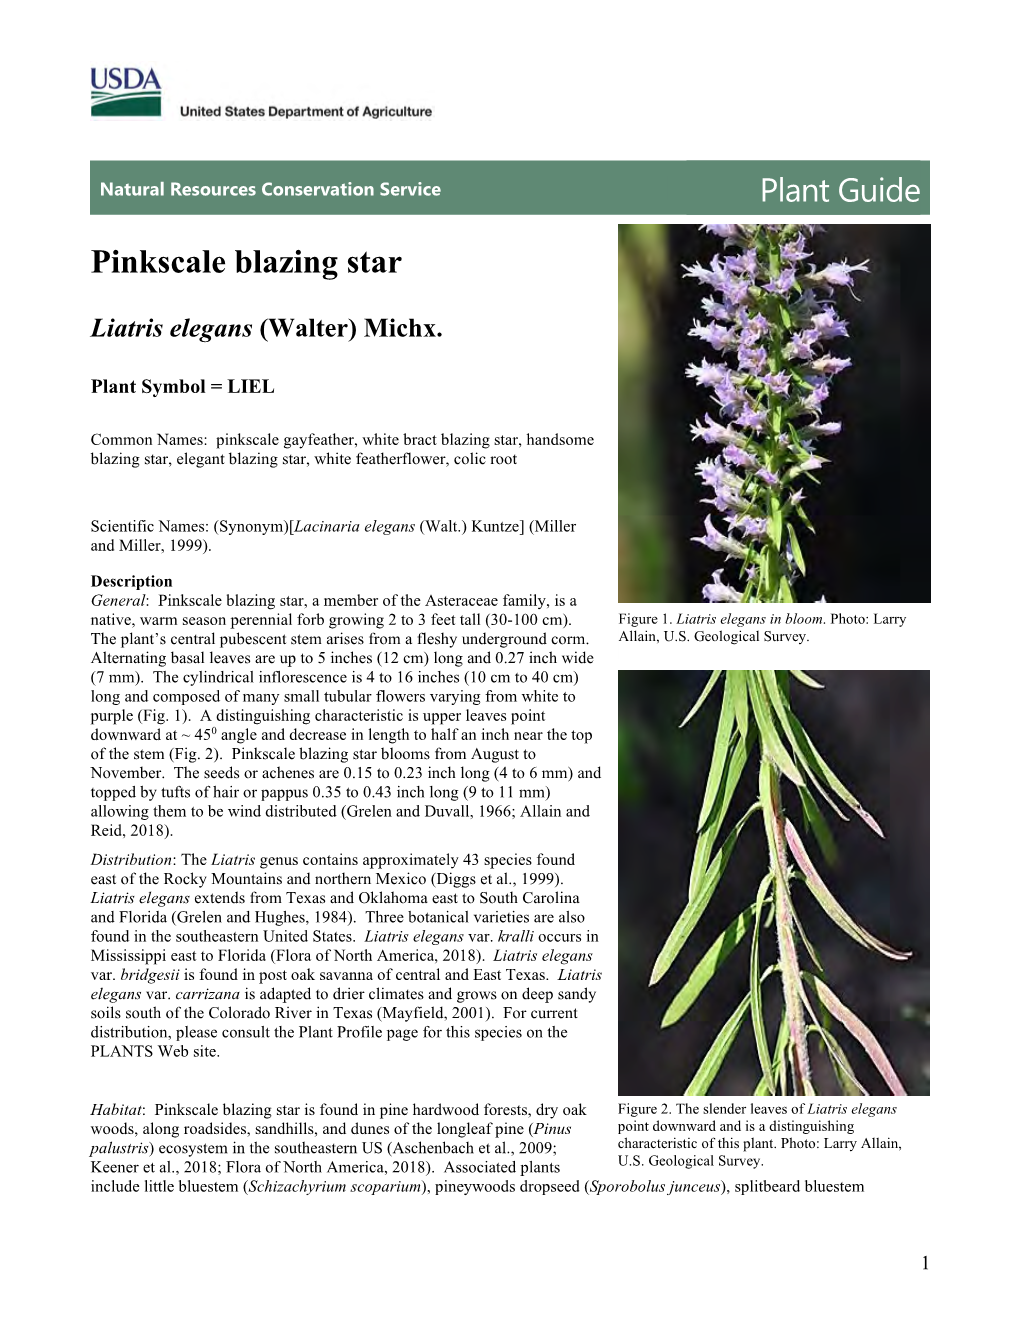 Plant Guide for Pinkscale Blazing Star (Liatris Elegans)